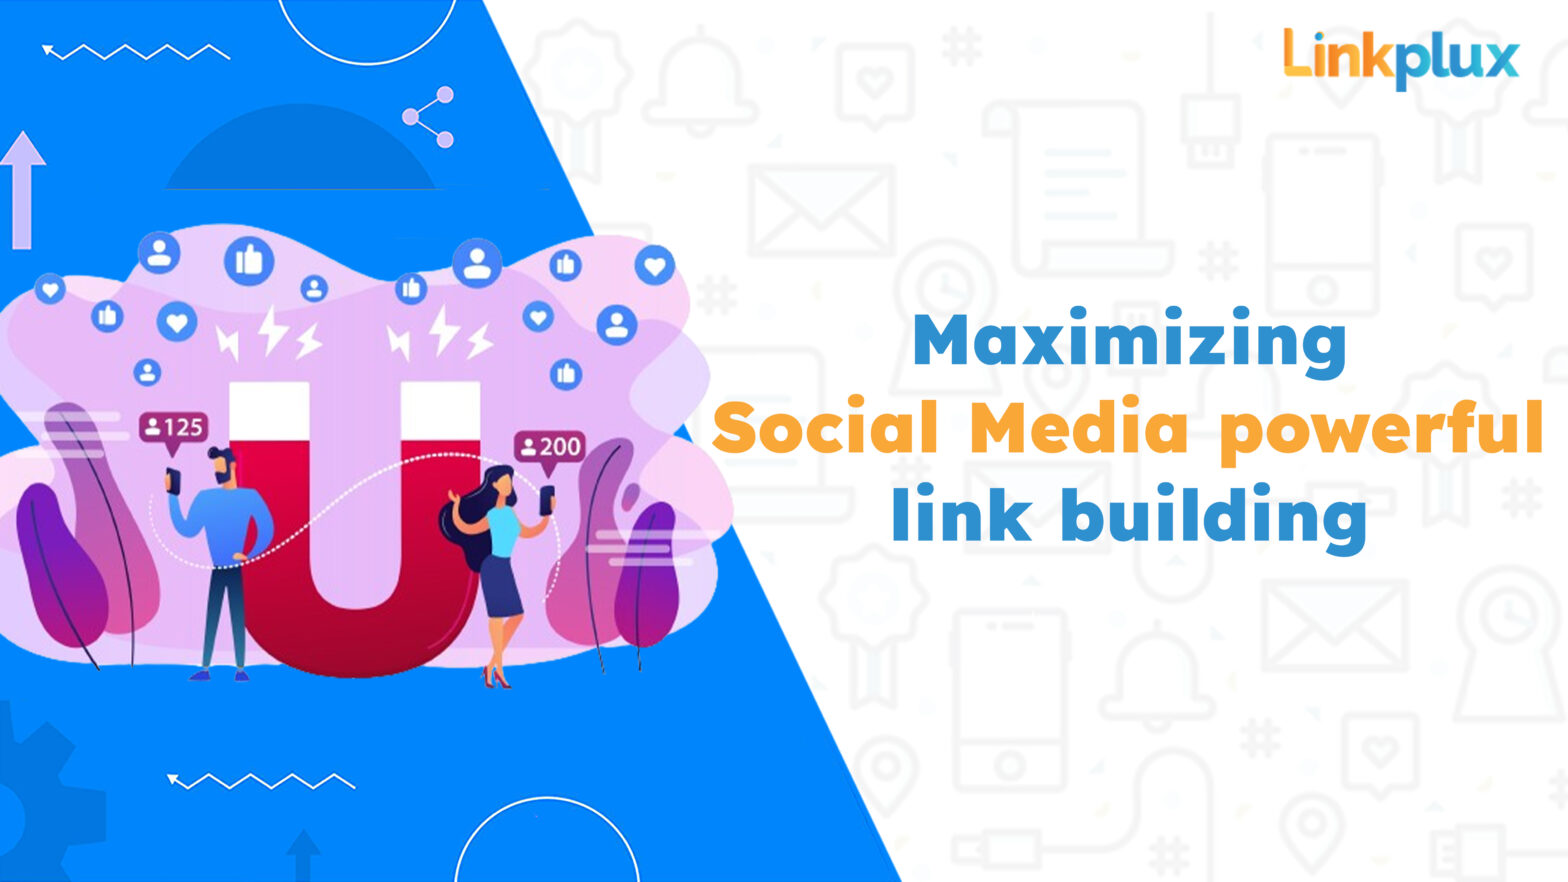 Social media powerful link building